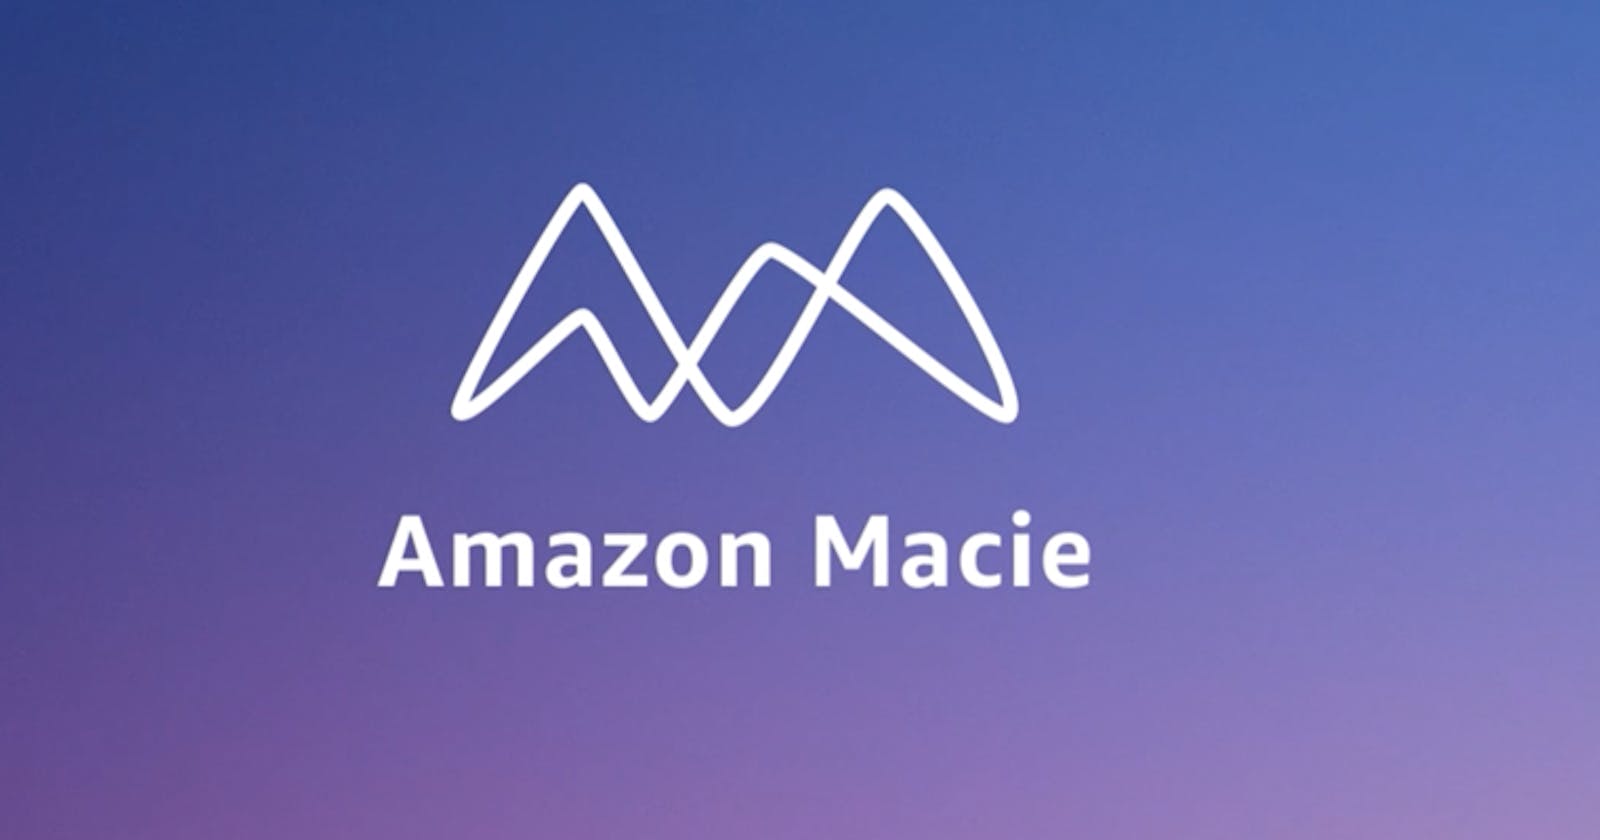 Introduction to Amazon Macie